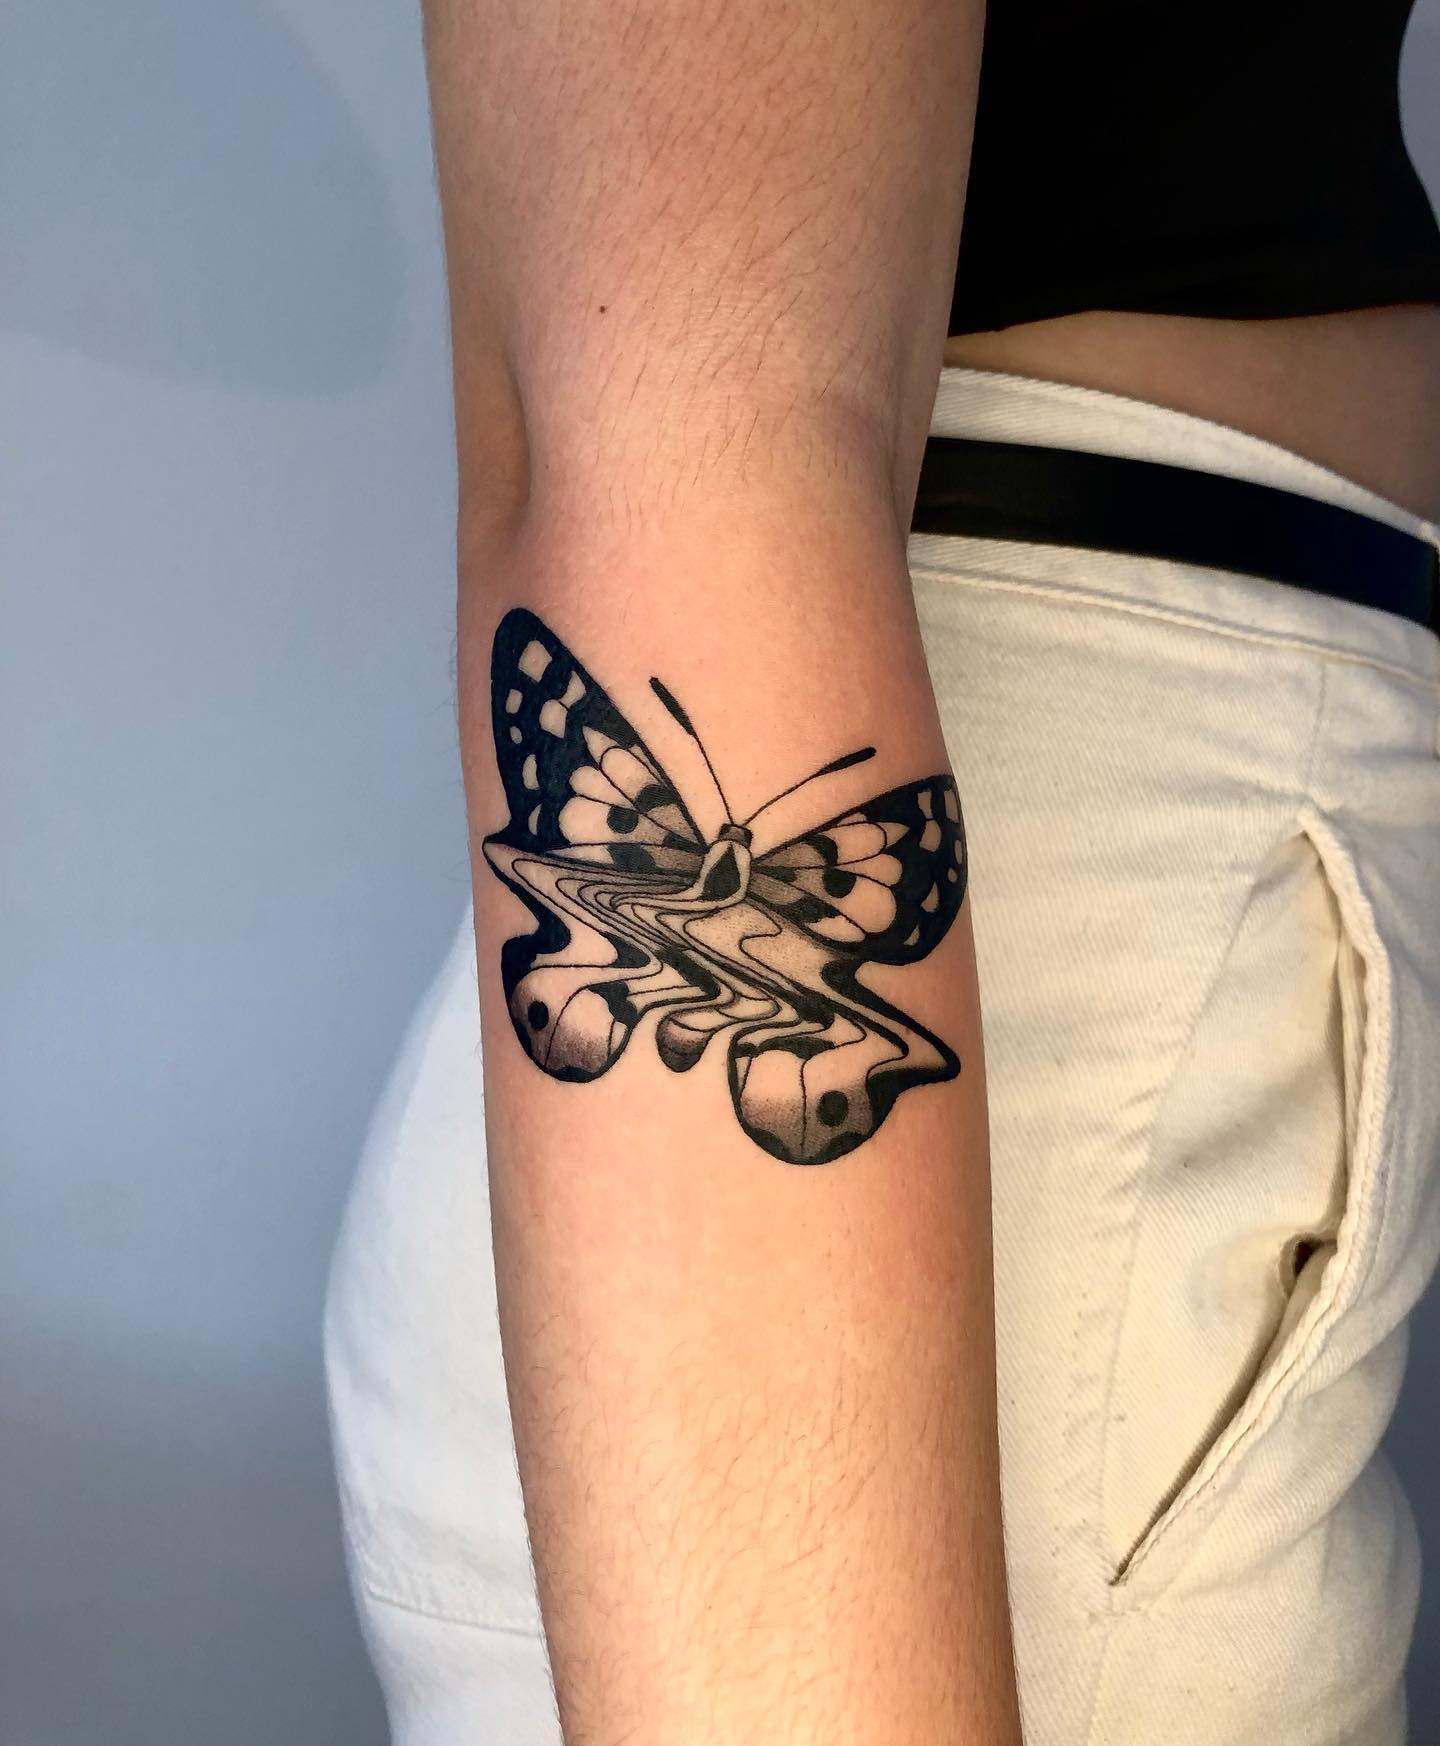 Tatuaje de mariposa negra.